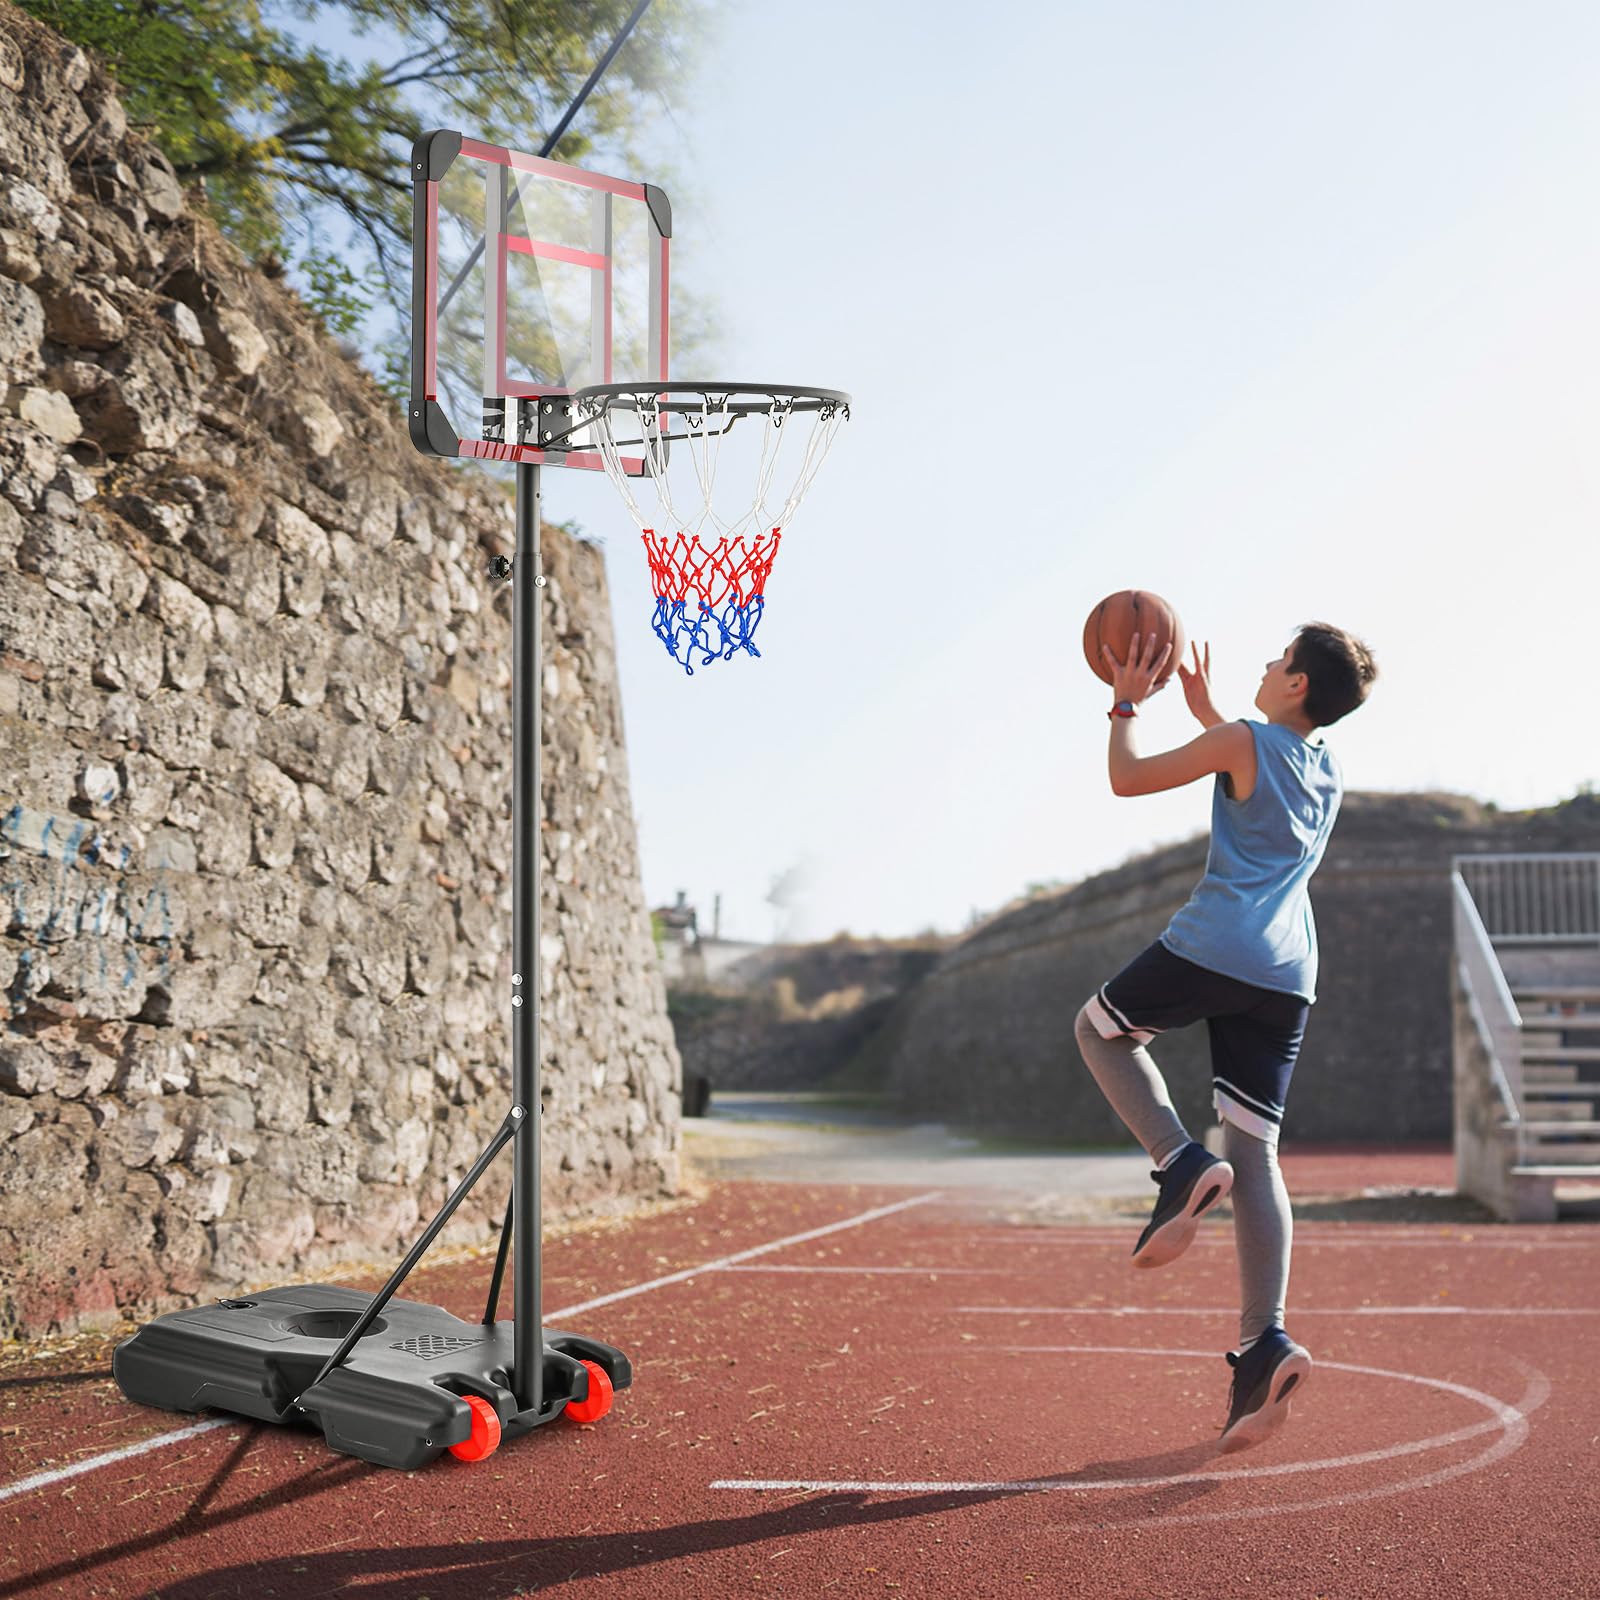 Giantex Portable Basketball Hoop